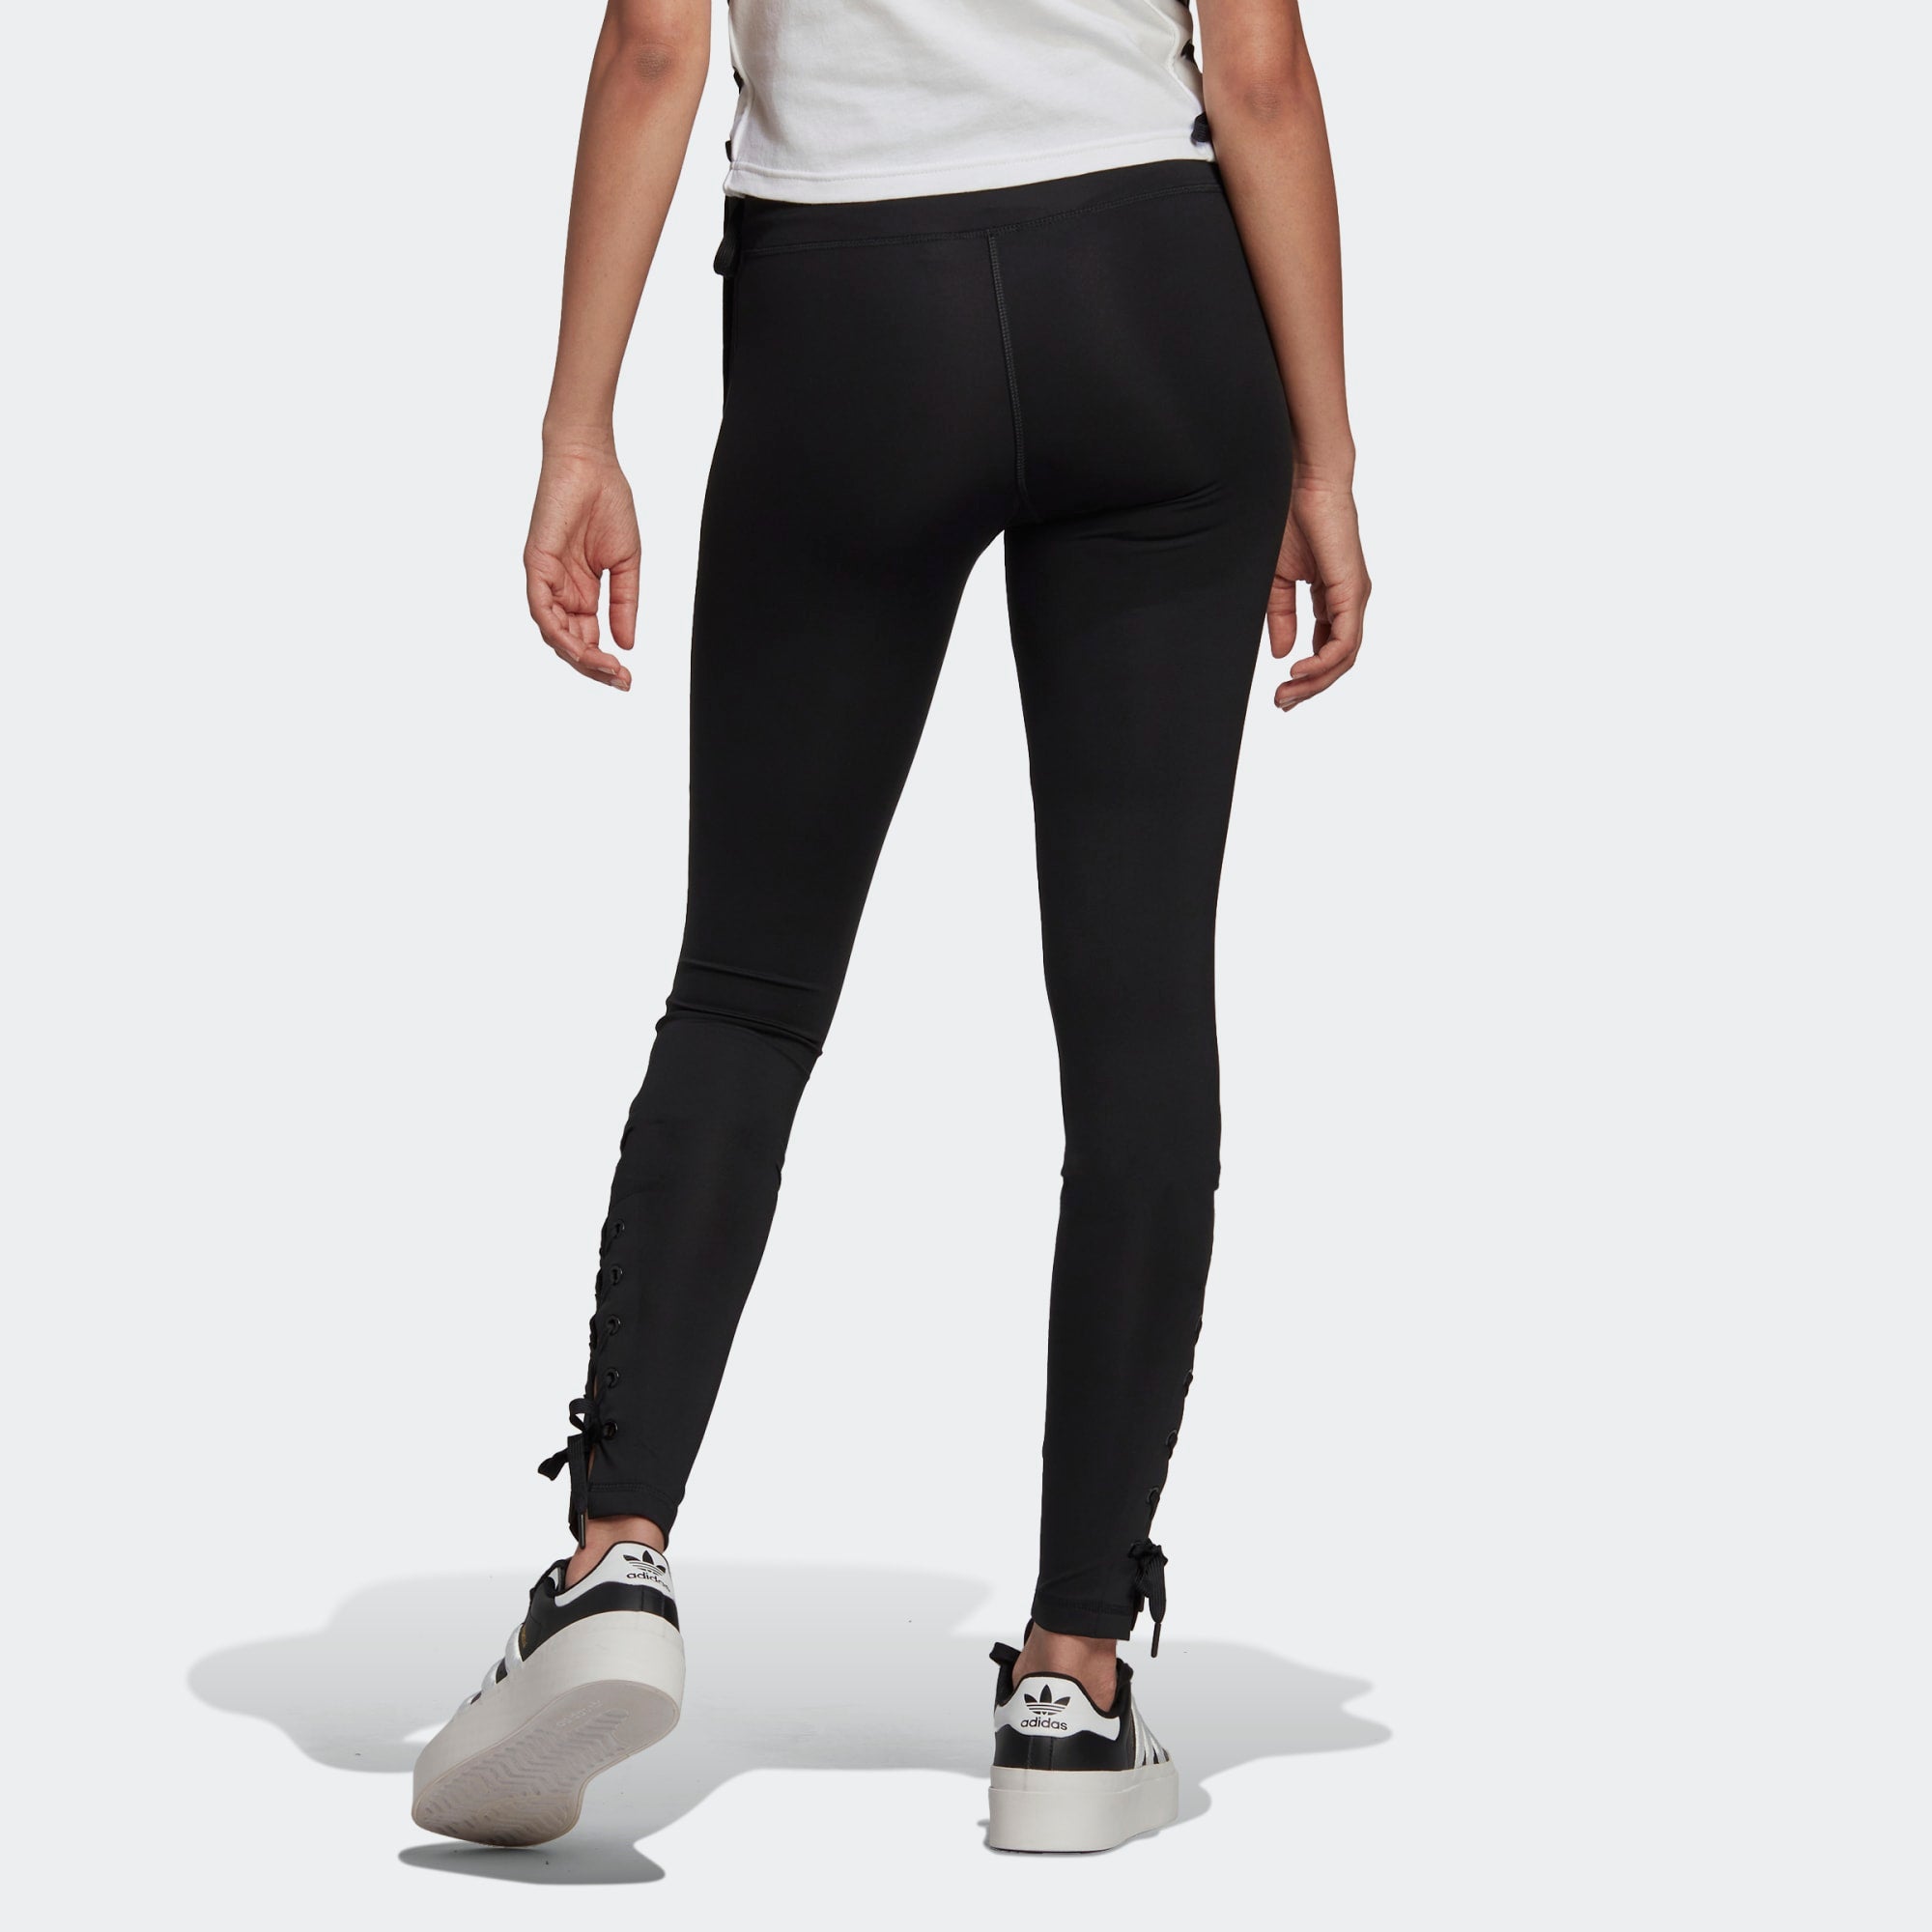 Adidas Women's Criss Cross Legging Black (Plus Size) Adidas